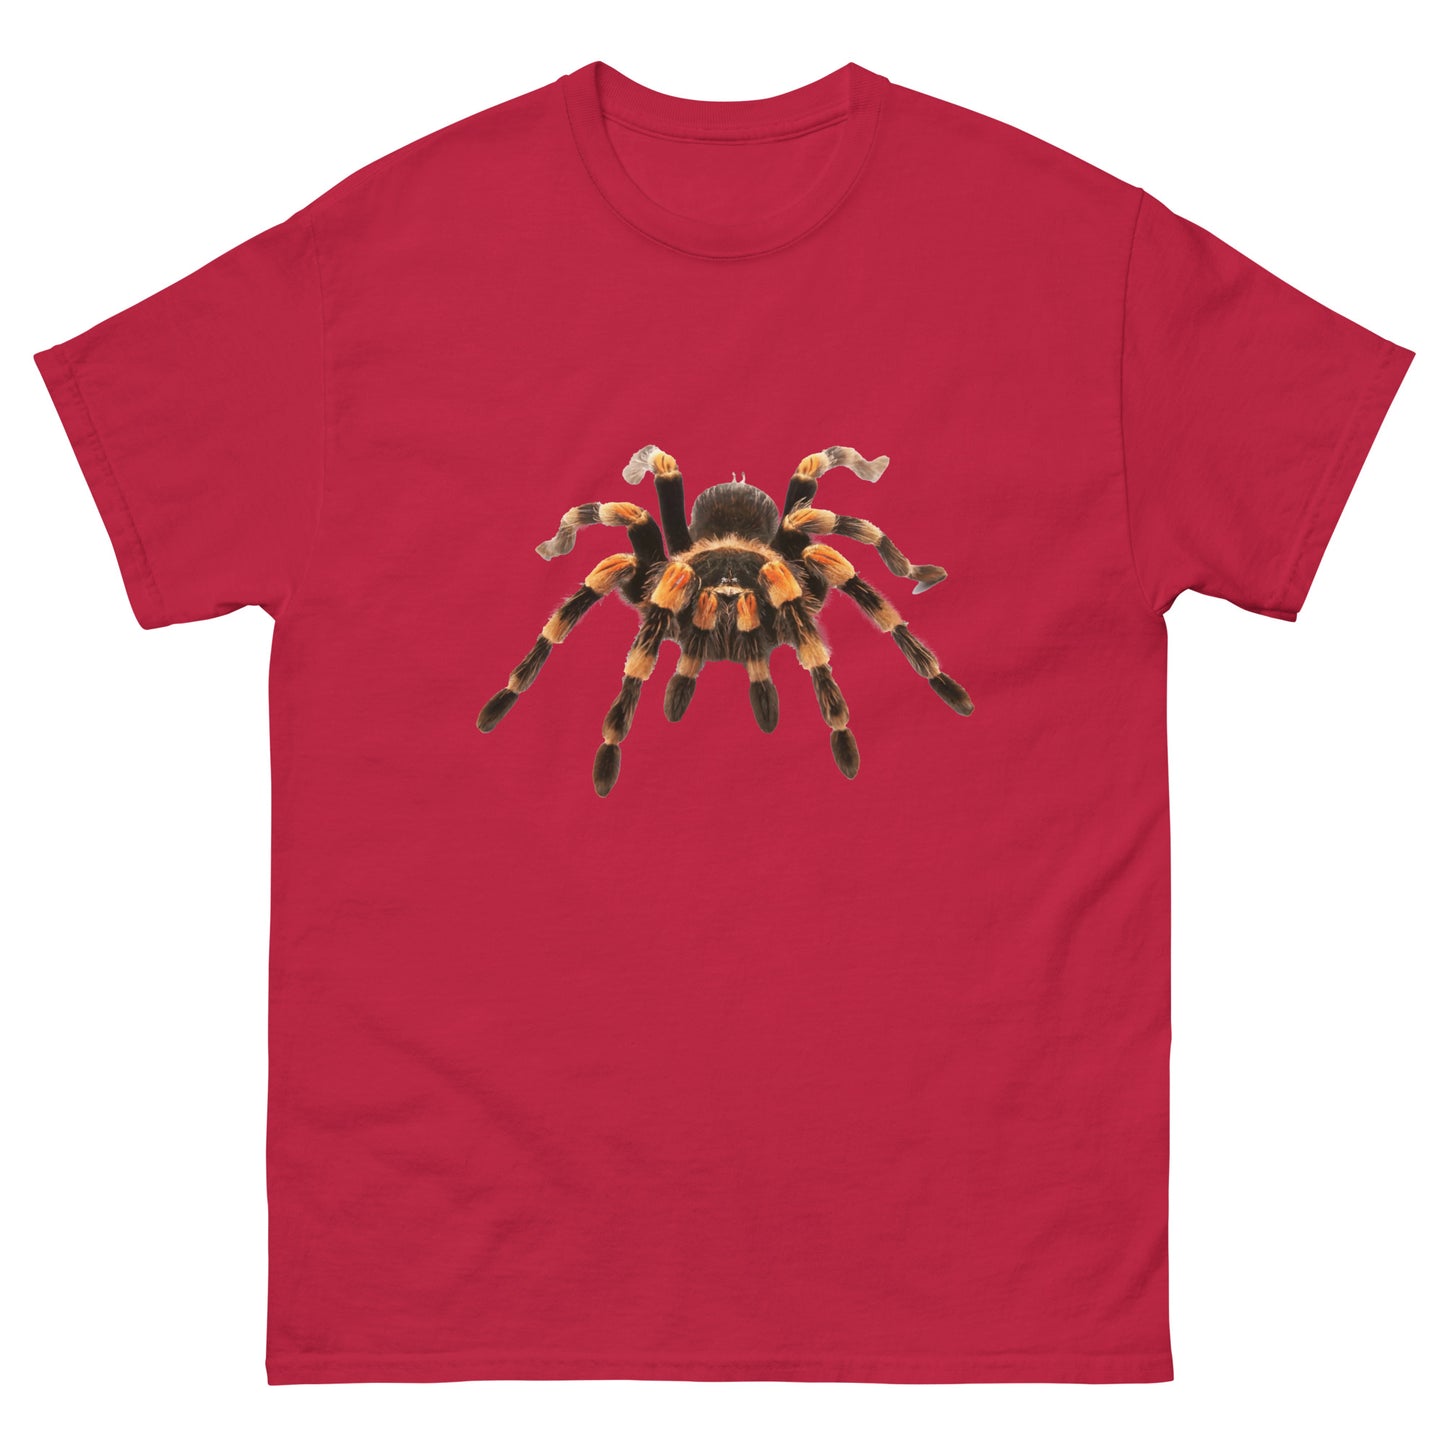 Mens classic t-shirt printed with a Tarantula Spider